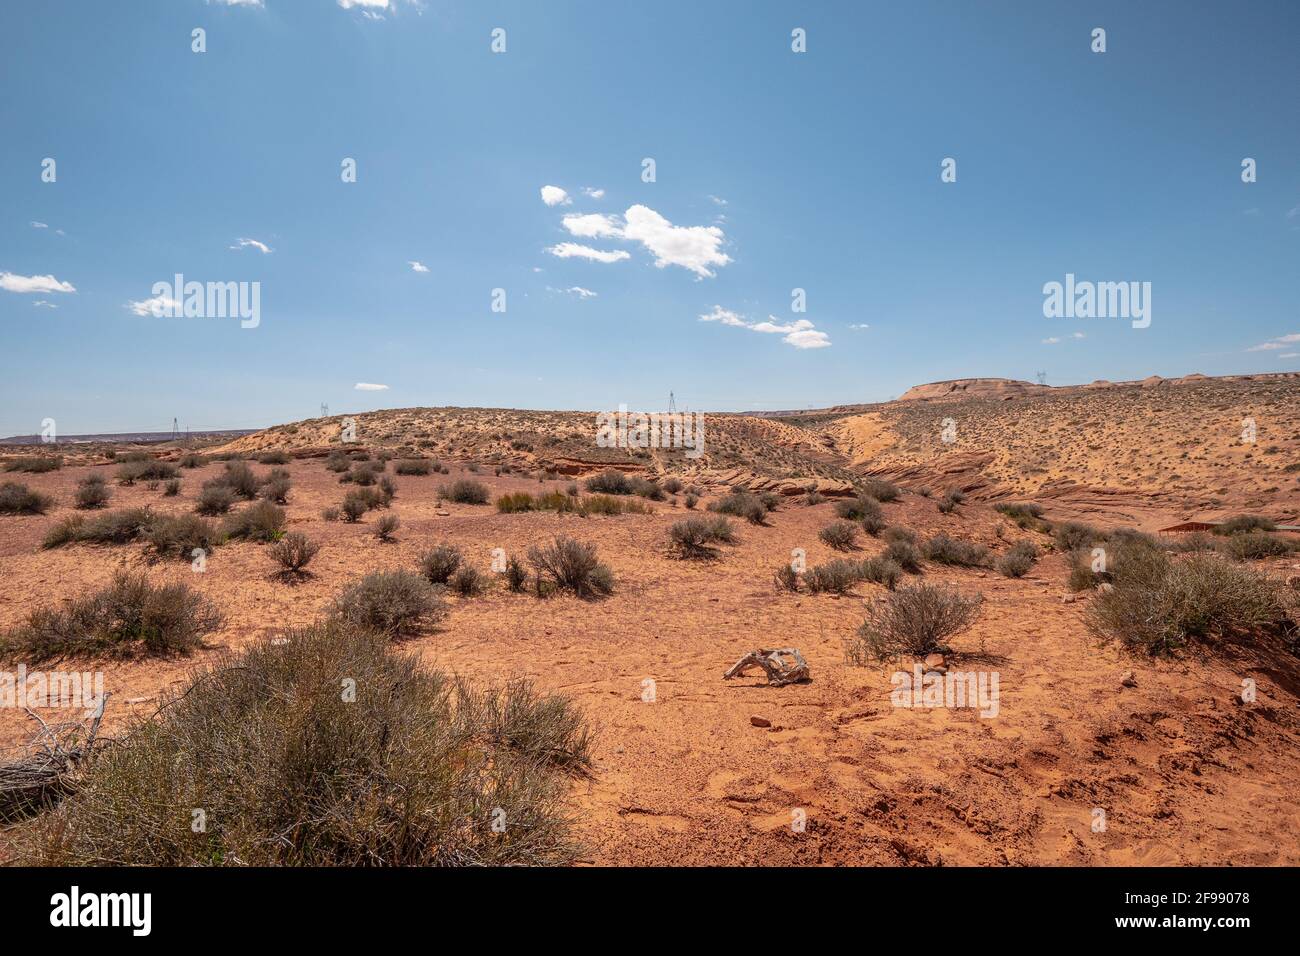 The desert of Utah - travel photography Stock Photo